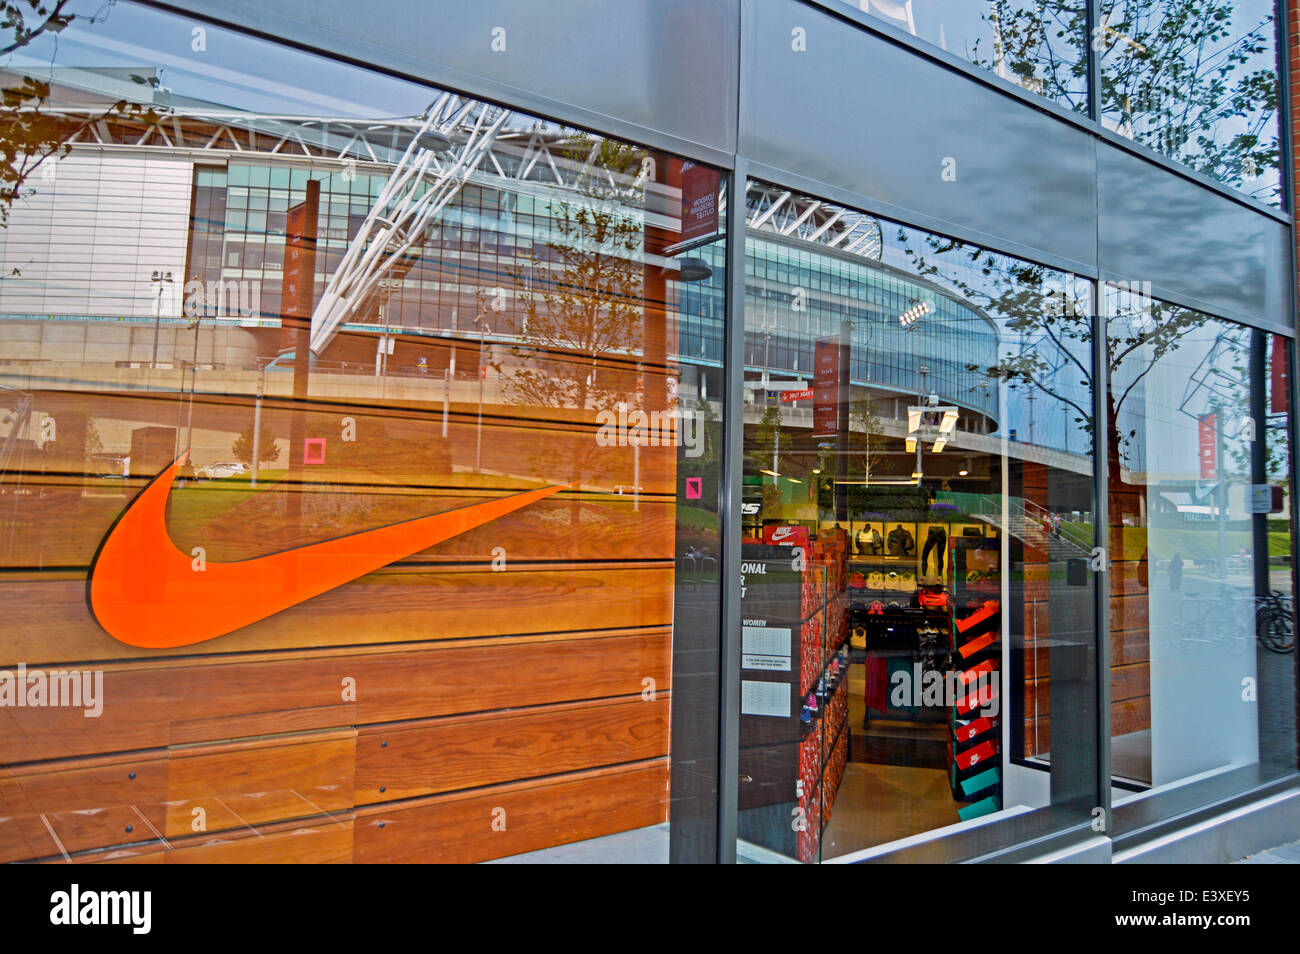 Nike outlet store -Fotos und -Bildmaterial in hoher Auflösung – Alamy